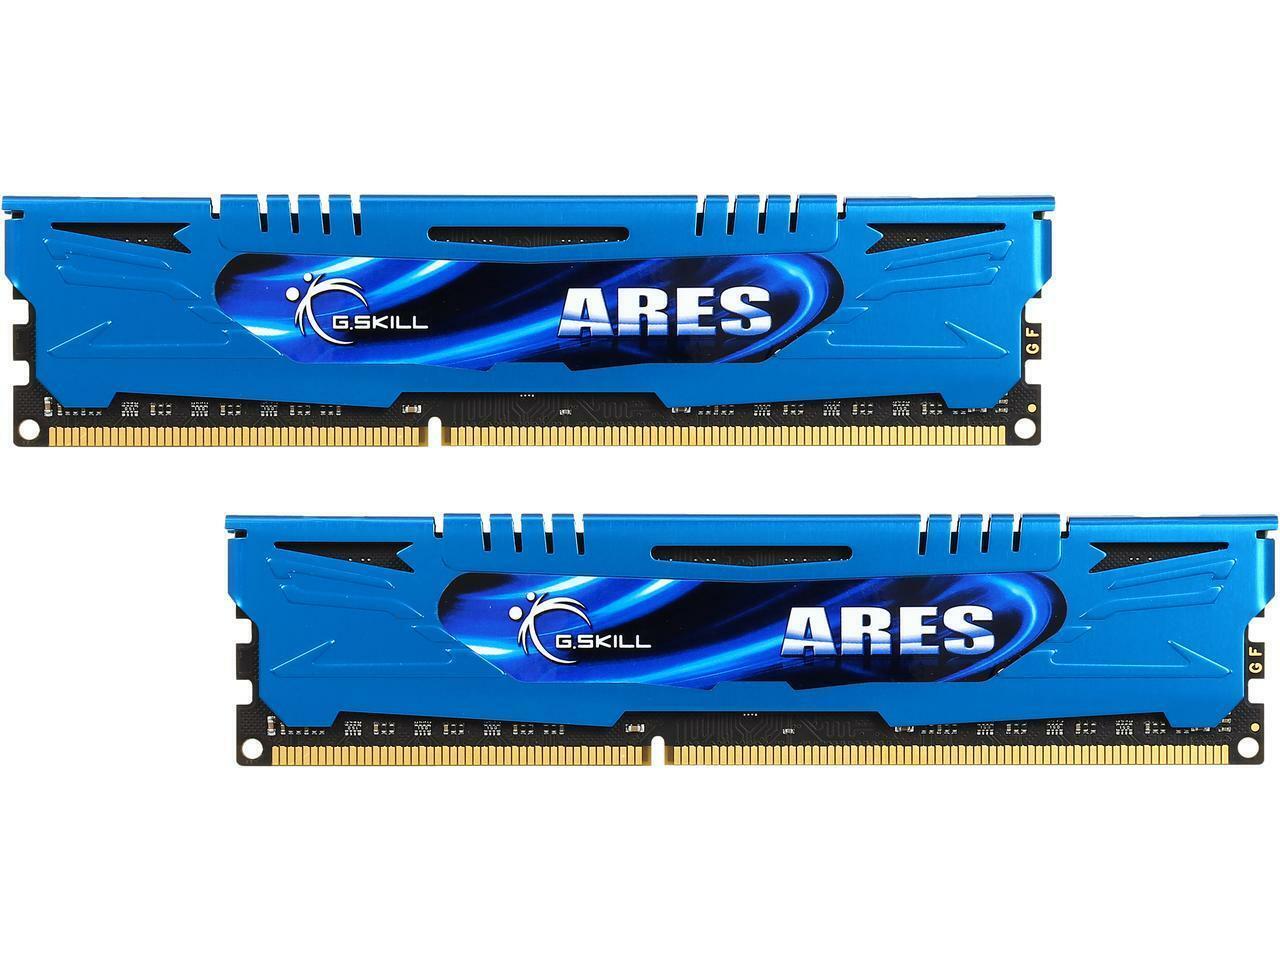 G.SKILL Ares Series 16GB (2 x 8GB) 240-Pin PC RAM DDR3 1600 (PC3 12800) Intel Z8